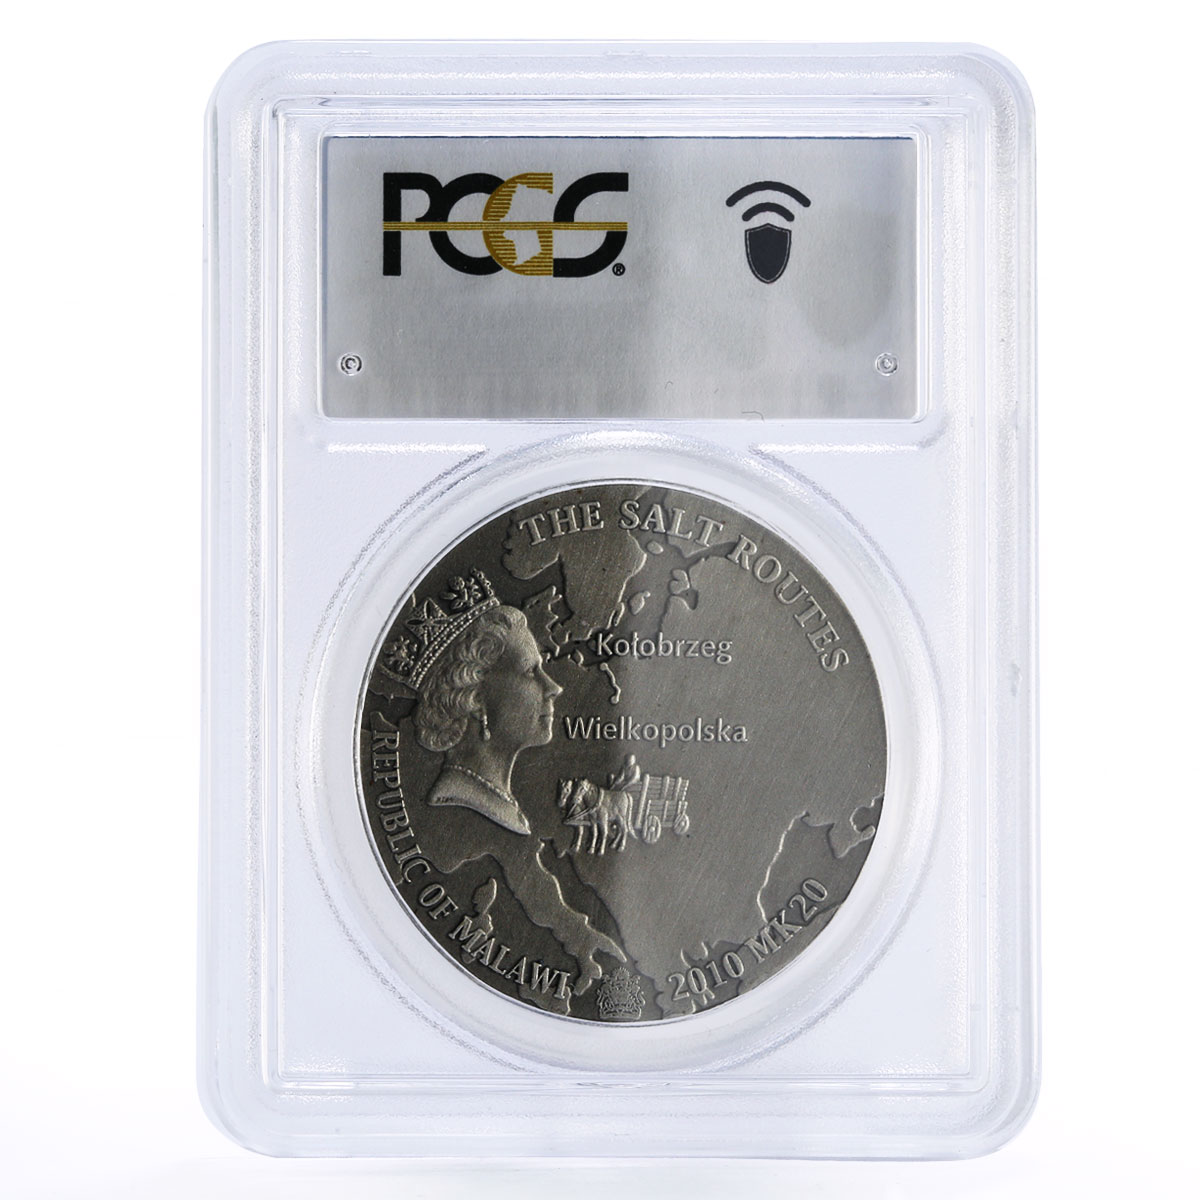 Malawi 20 kwacha Salt Routes Kolobrzeg Wielkopolska MS70 PCGS silver coin 2010